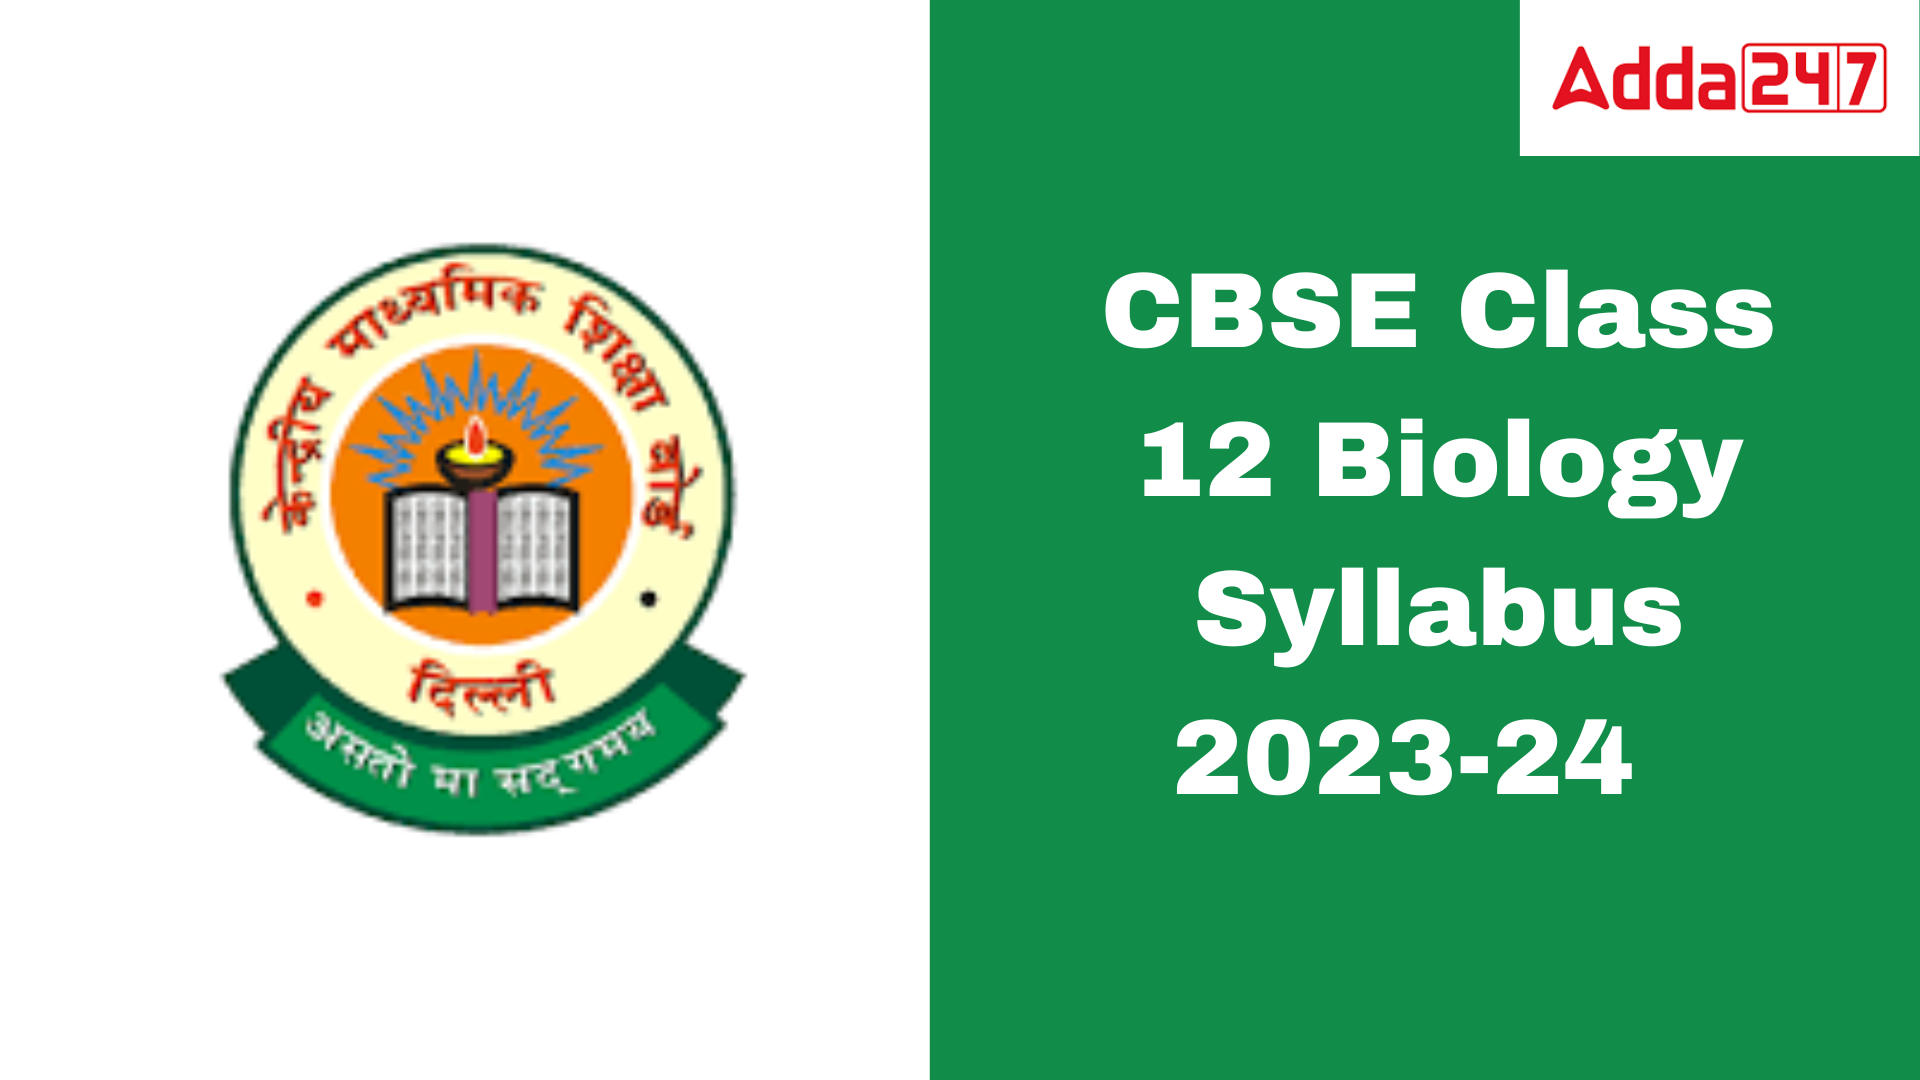 Class 12 Biology Syllabus 202324, CBSE PDF Download